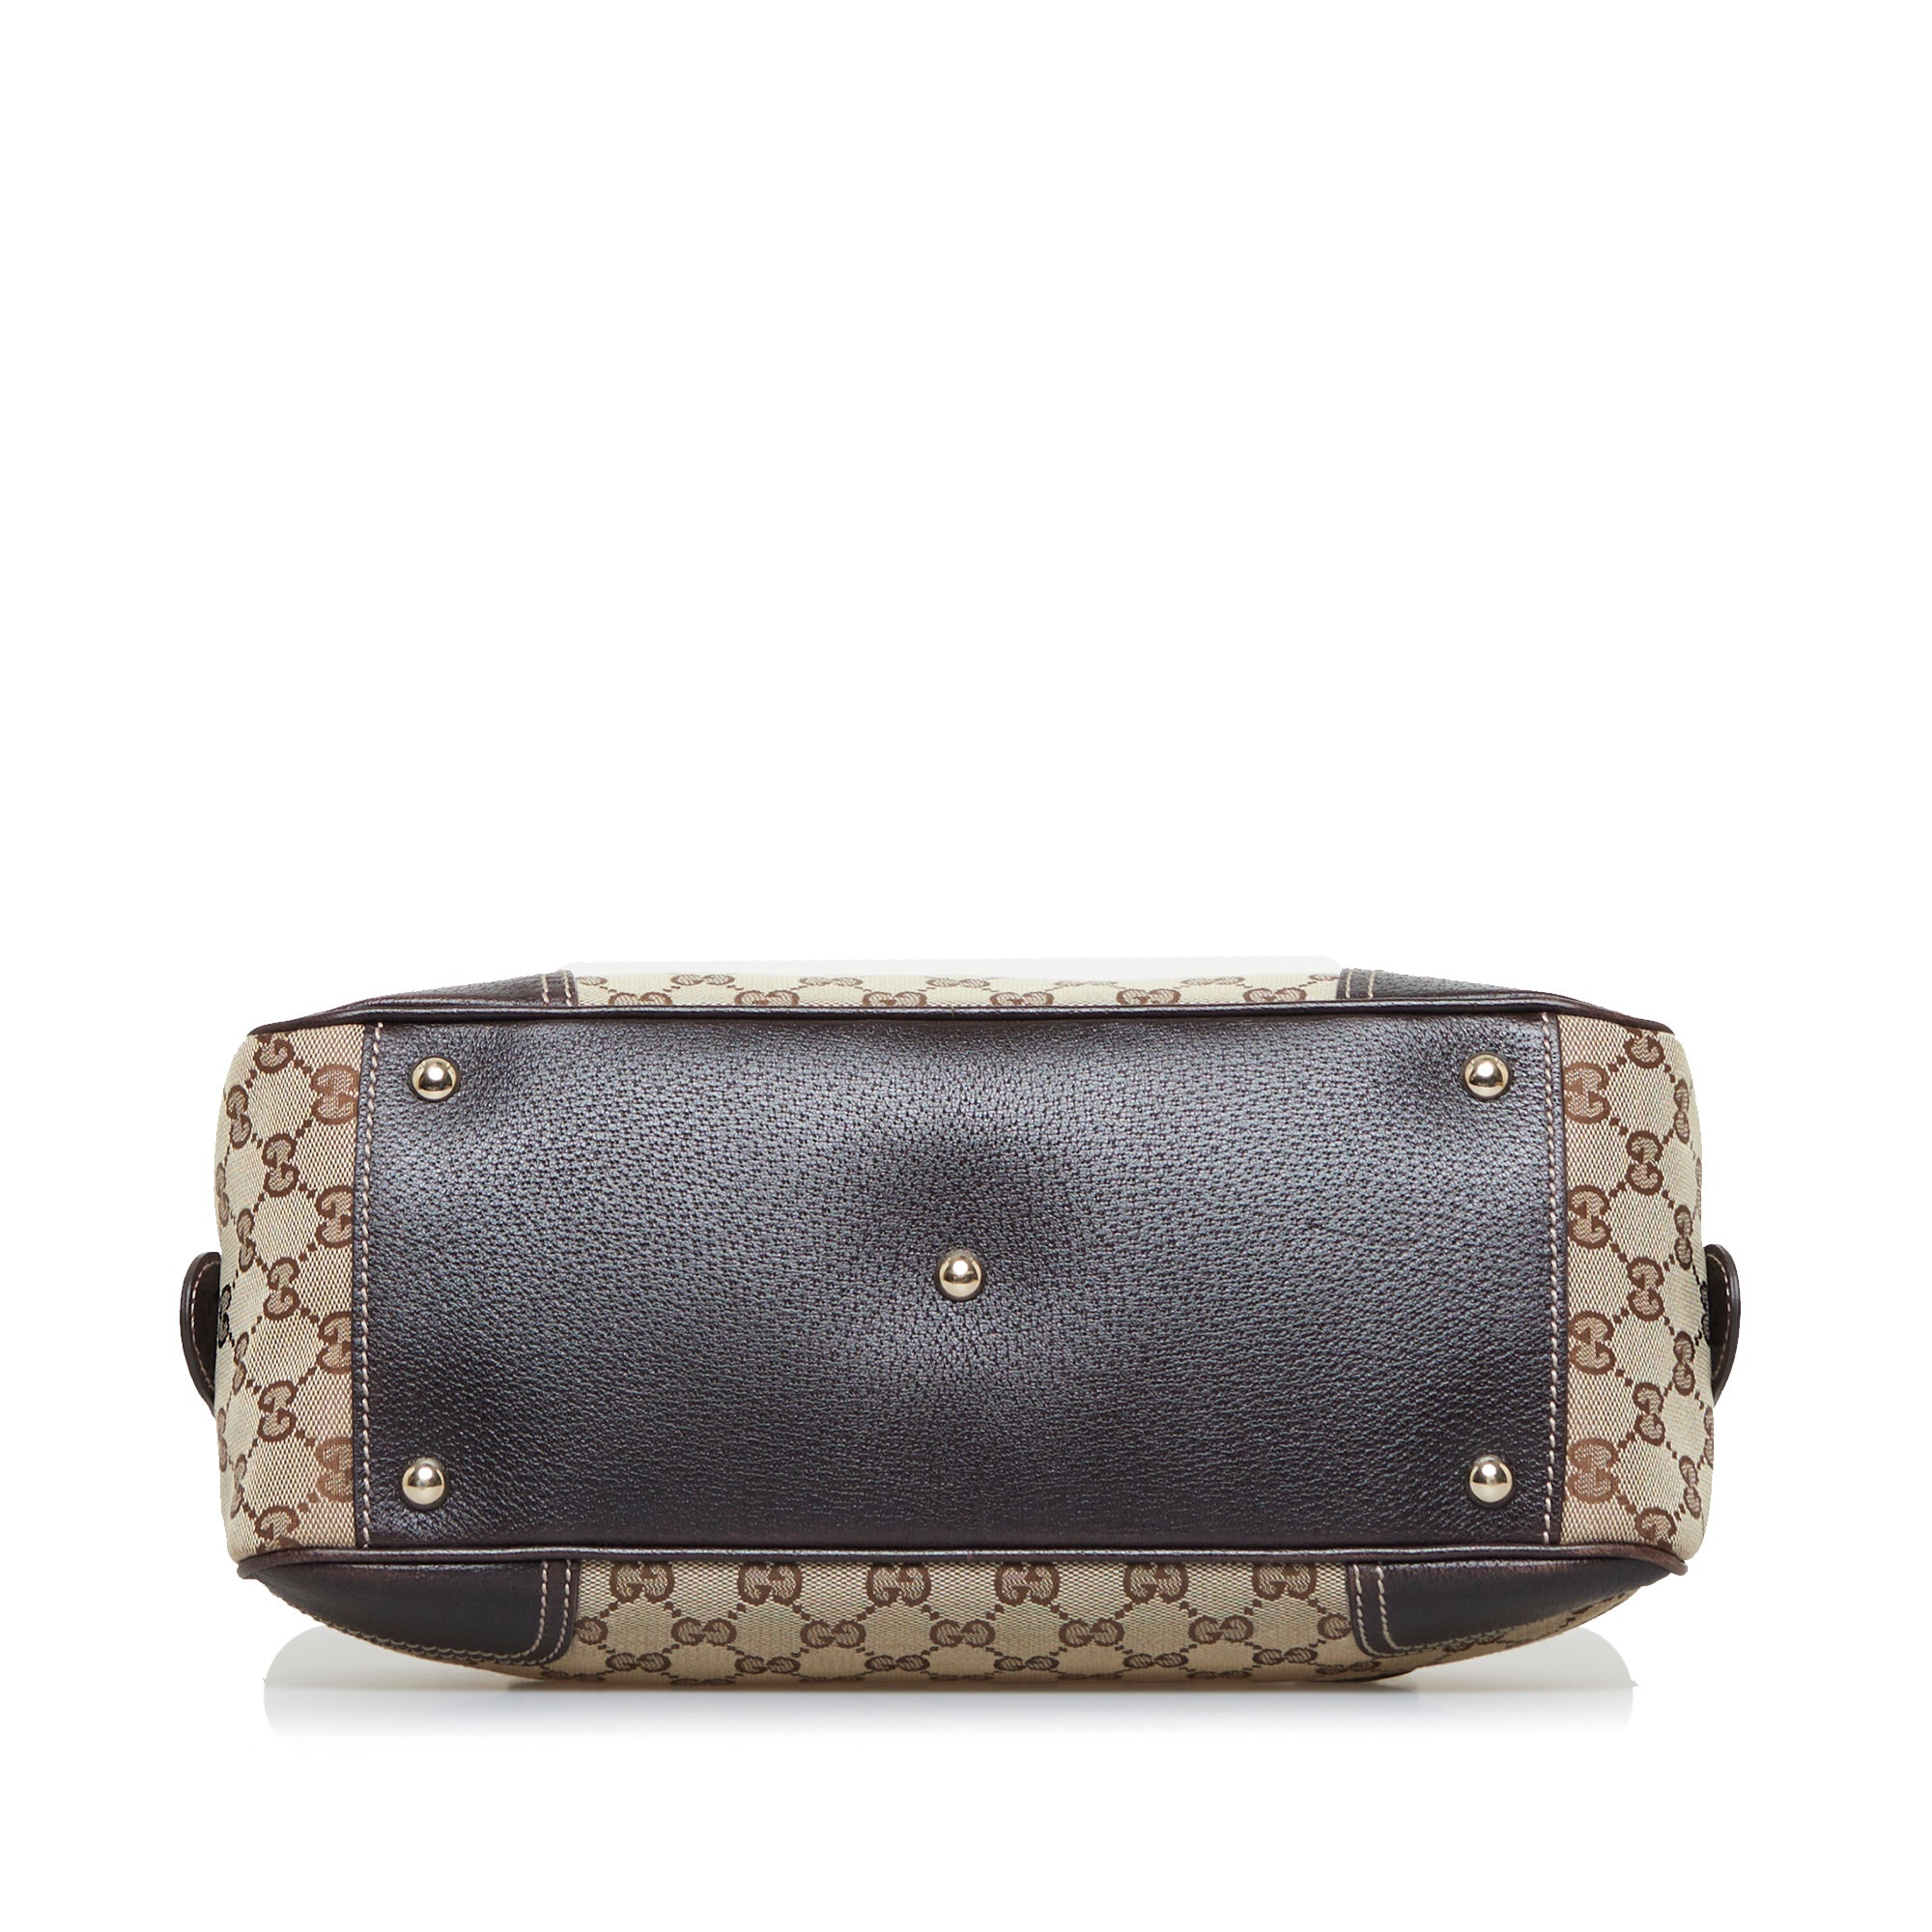 Gucci GG Canvas Large Princy Tote - Brown Totes, Handbags - GUC1337770